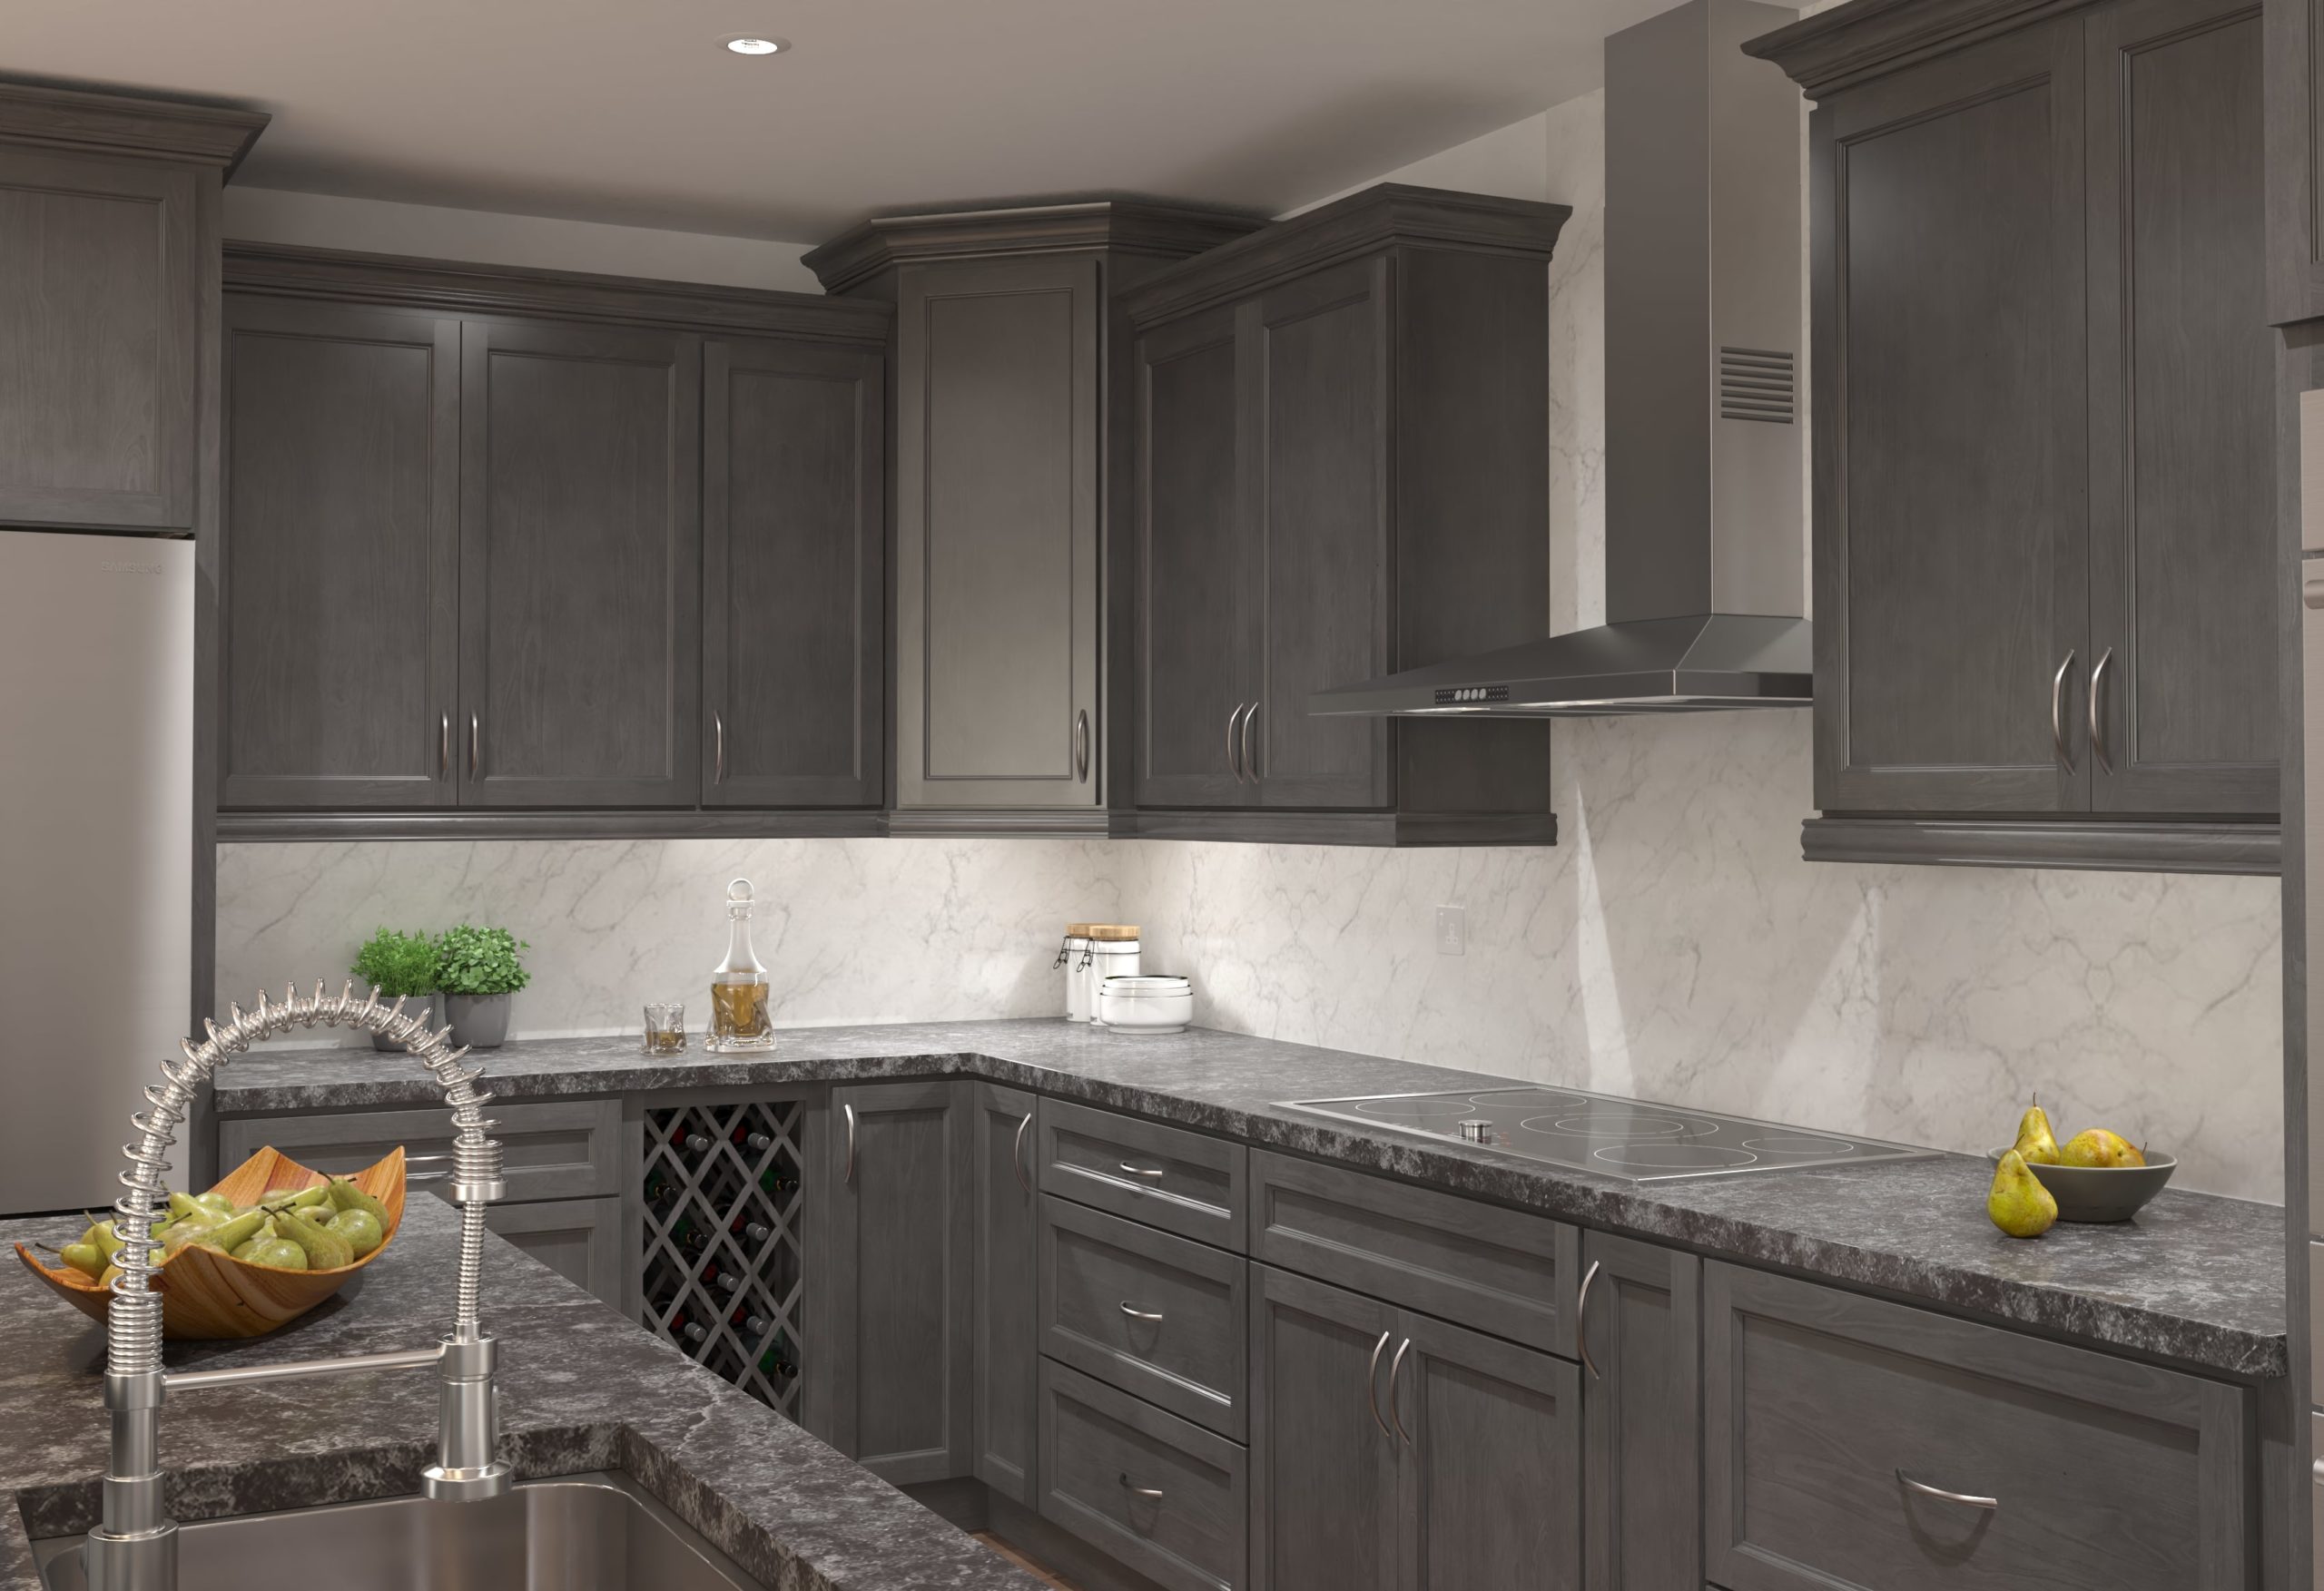 Striking Kitchen Design Ideas Tile Backsplash White Cabinet